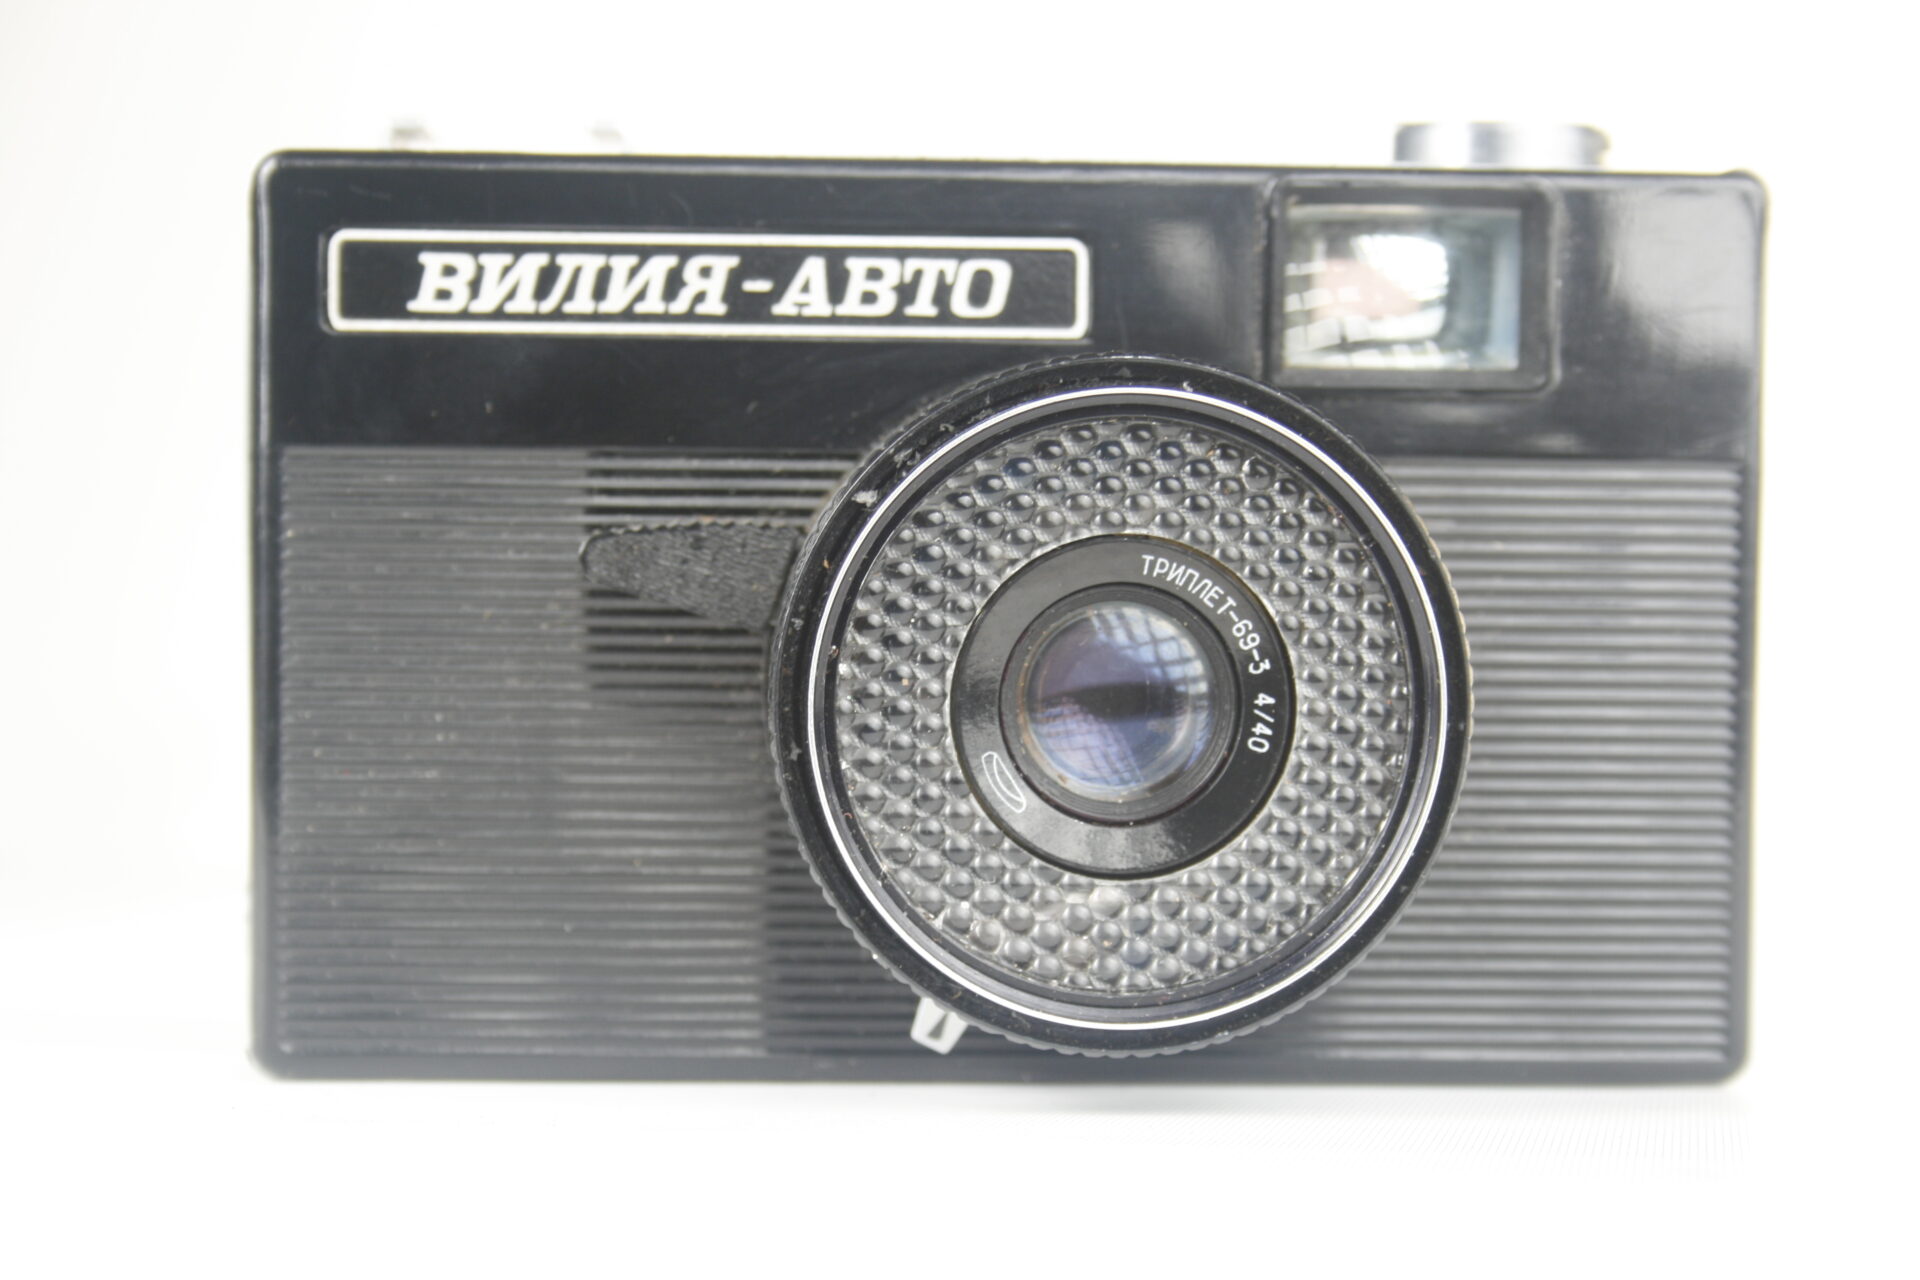 BelOMO Vilia-Auto. 35mm compact camera. 1973-1985. USSR.